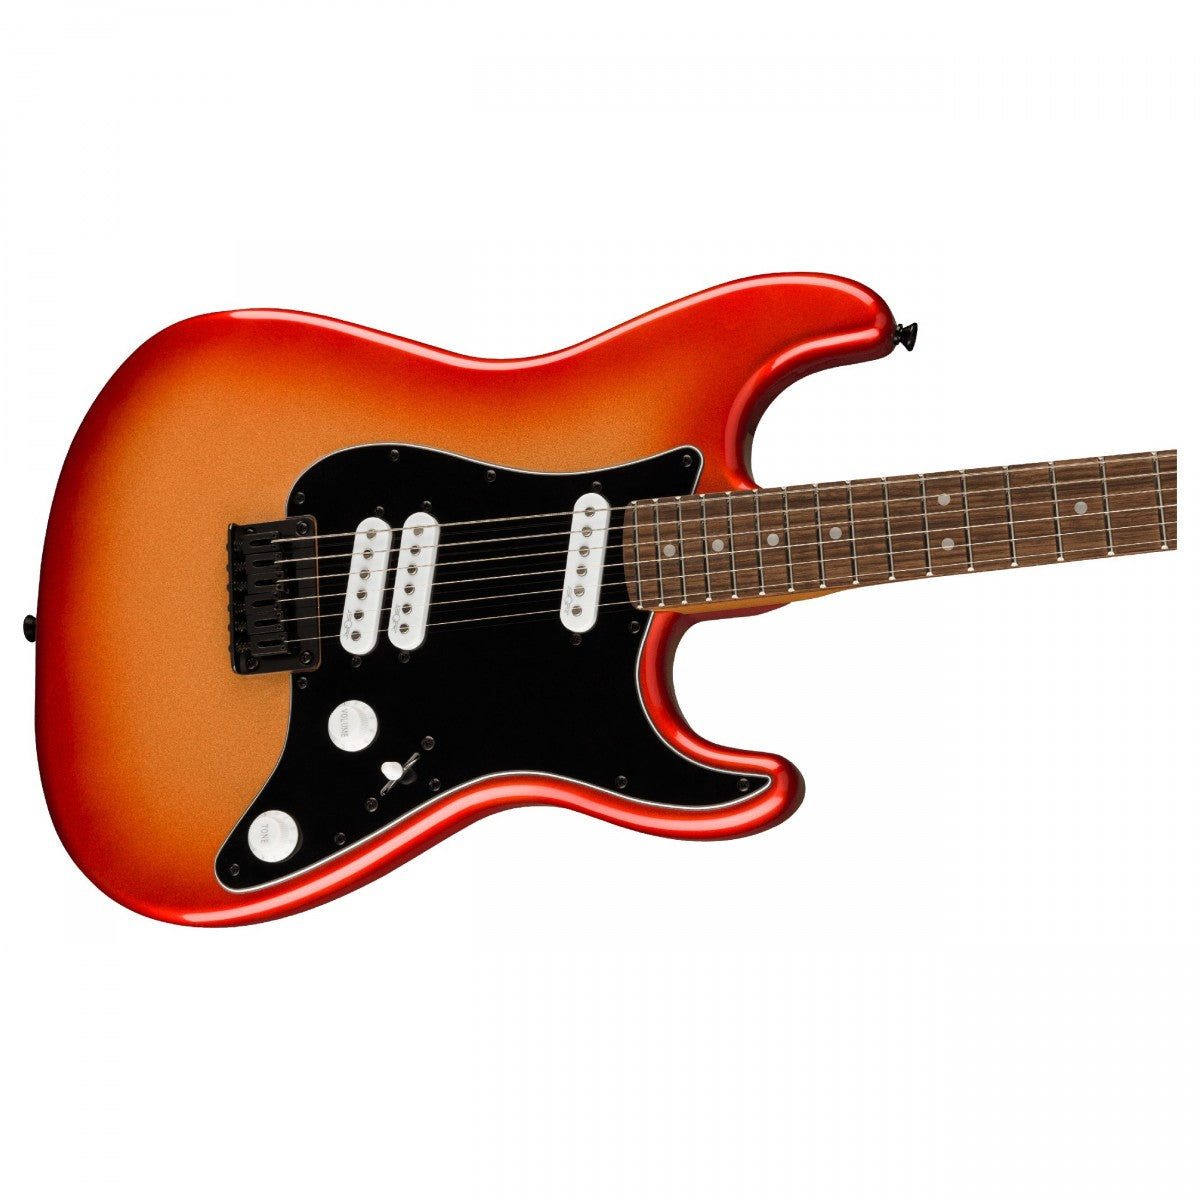 Squier Contemporary Stratocaster Special HT